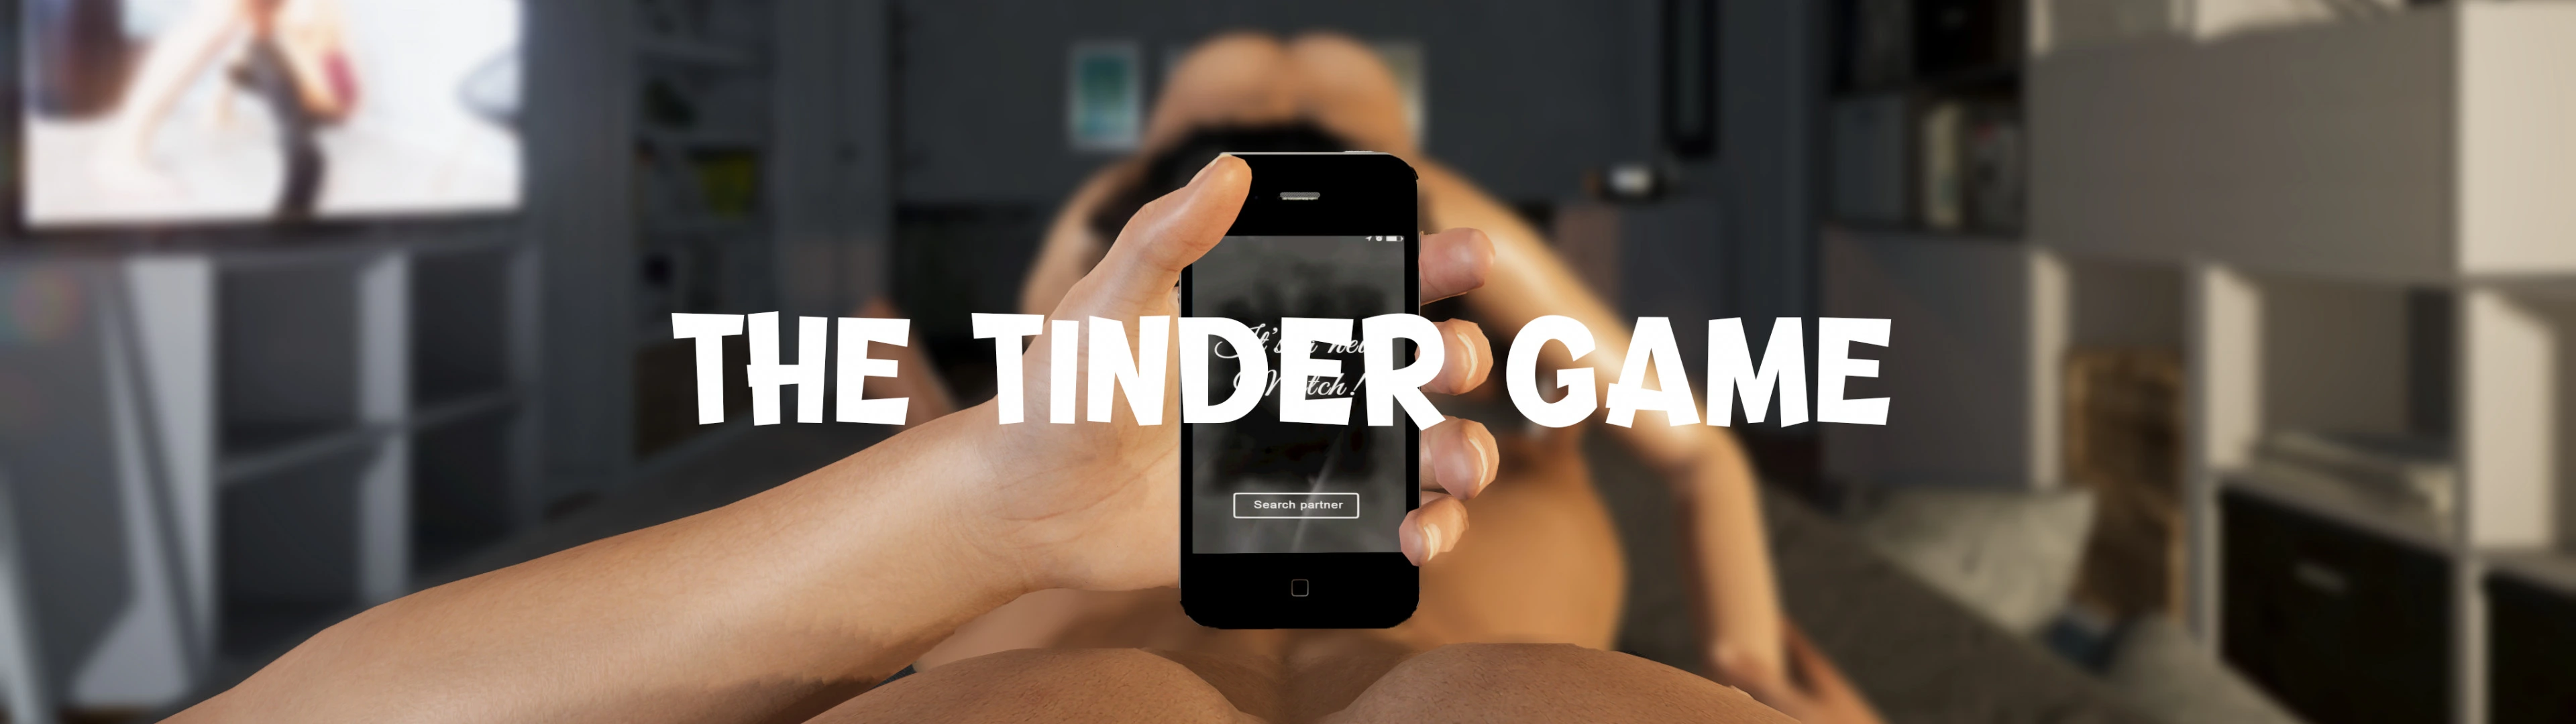 The Tinder Game main image